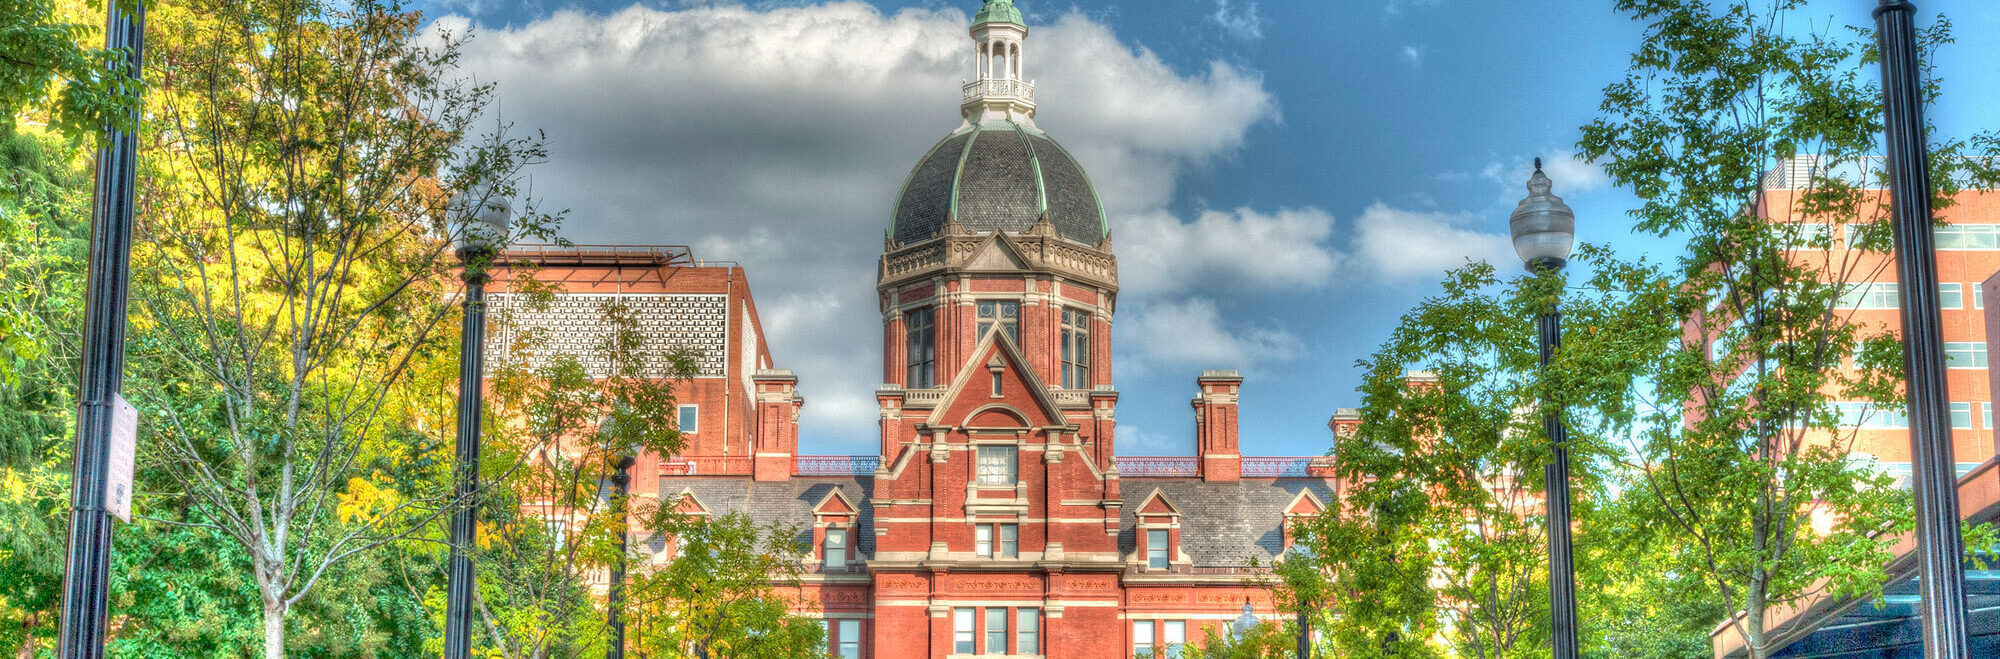 Johns Hopkins Dome (PathPhoto)